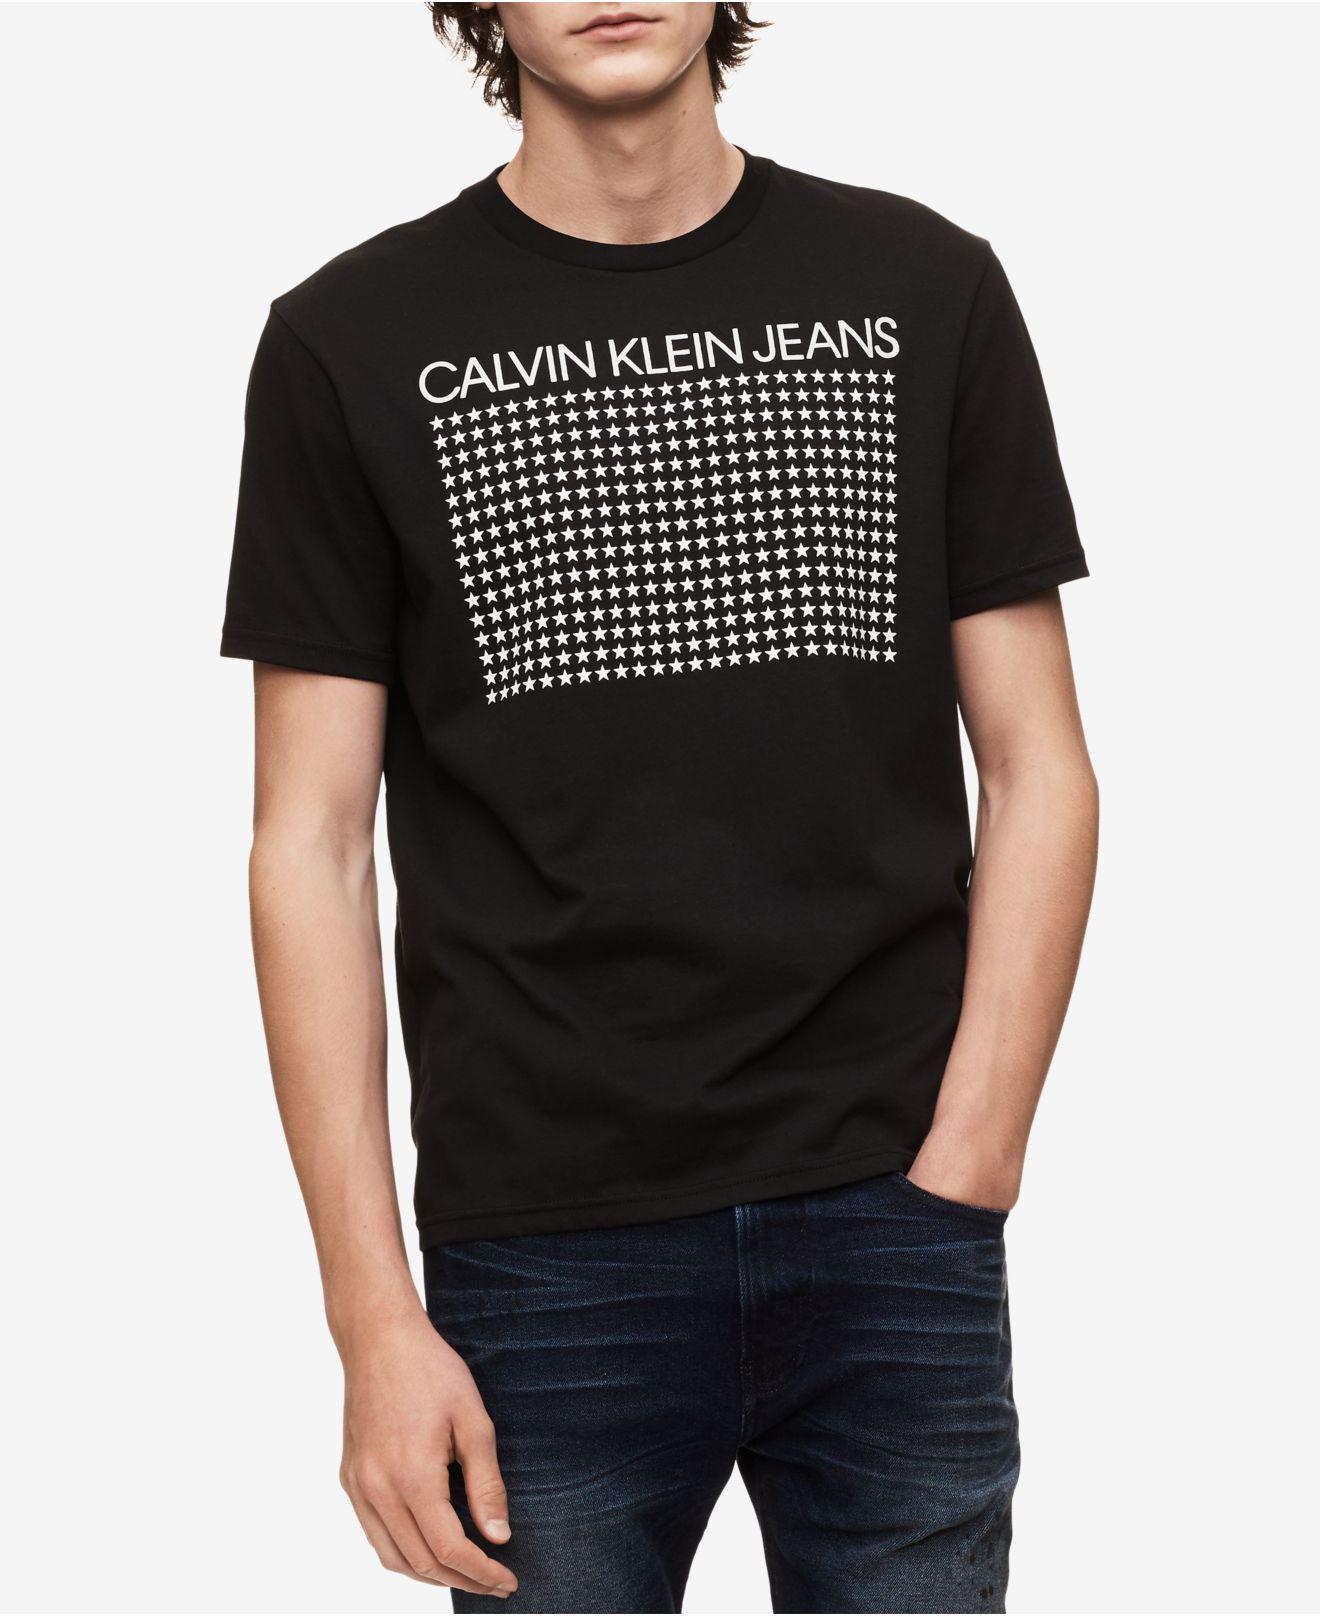 Calvin Klein Cotton Reflective Stars T-shirt in Black for Men - Lyst